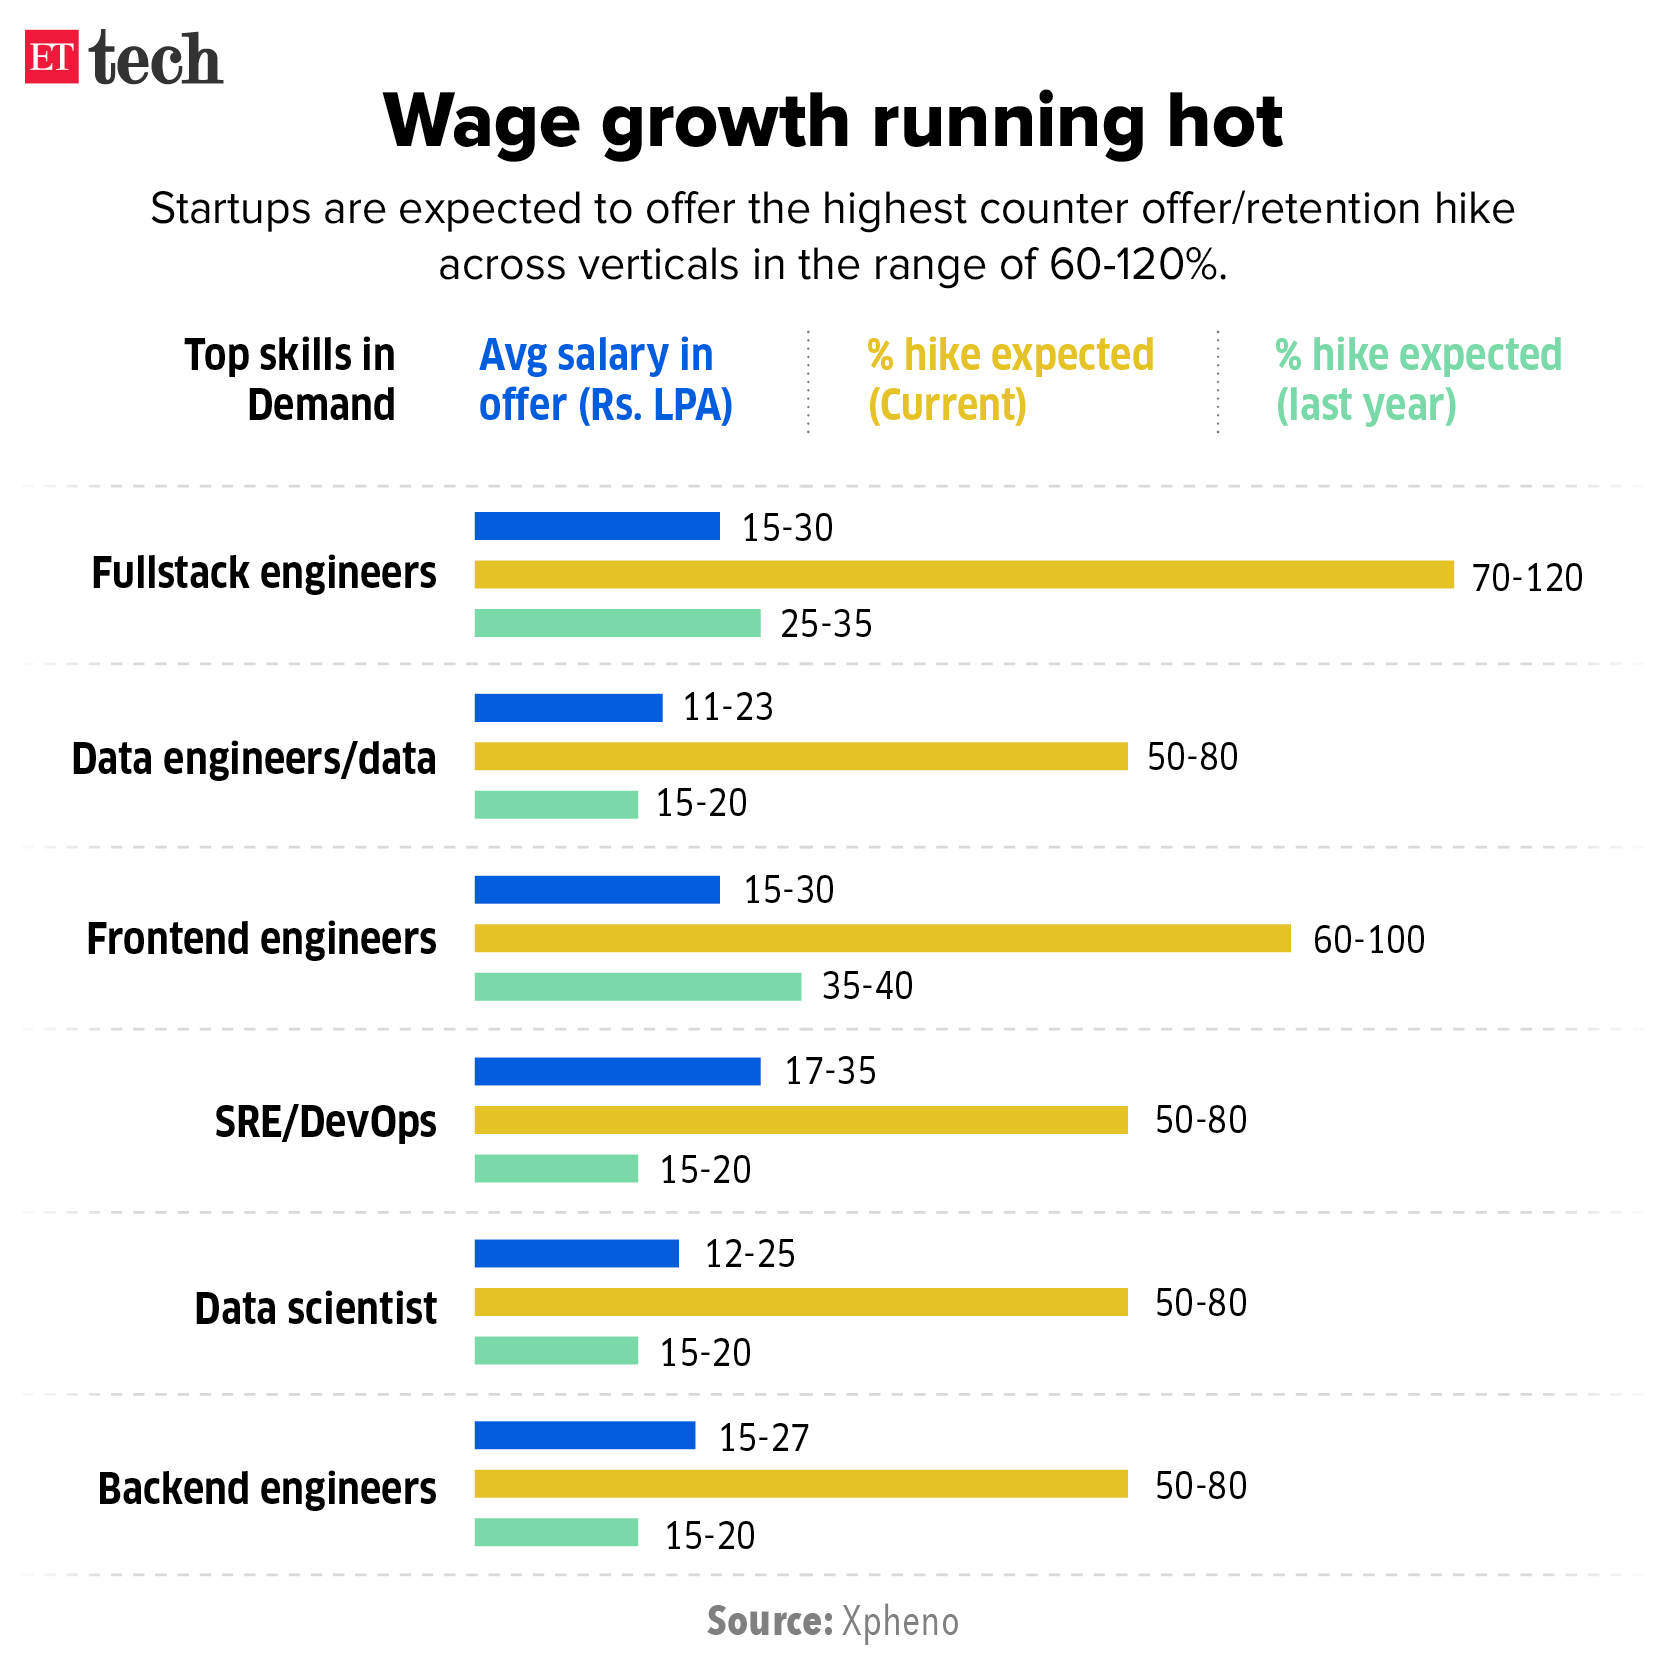 Wage growth running hot